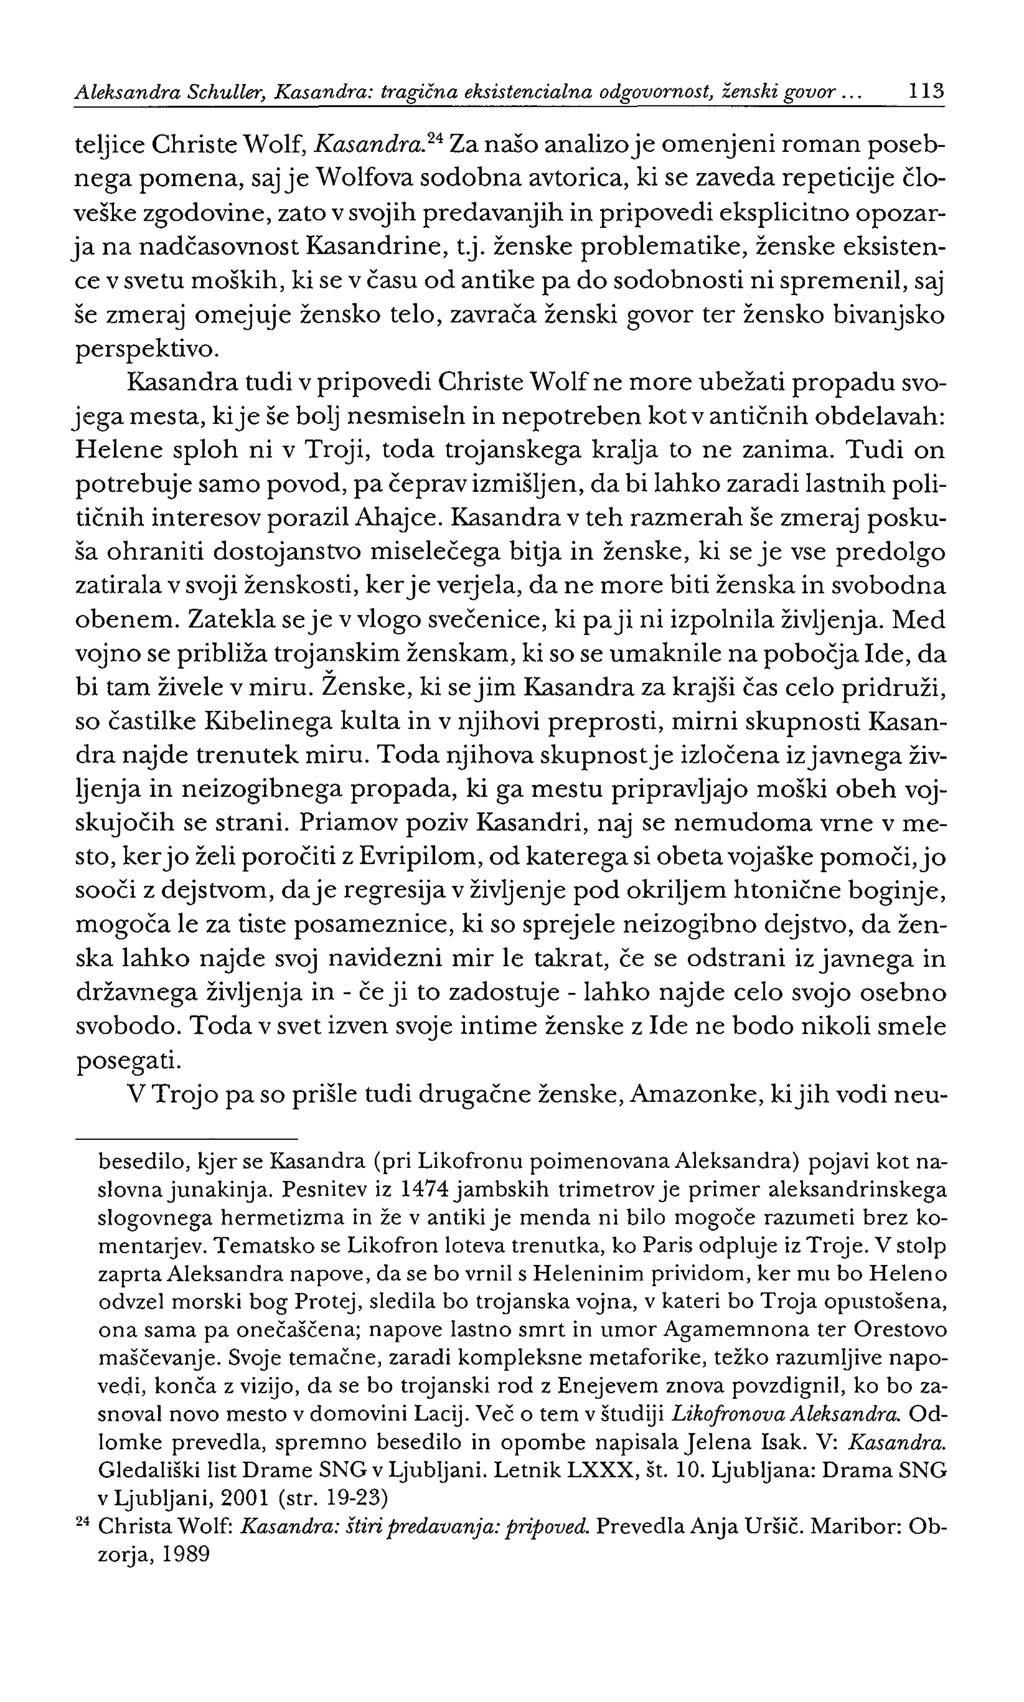 Aleksandra Schuller, Kasandra: tragična eksistencialna odgovornost, ženski govor... 113 teljice Christe Wolf, Kasandra.